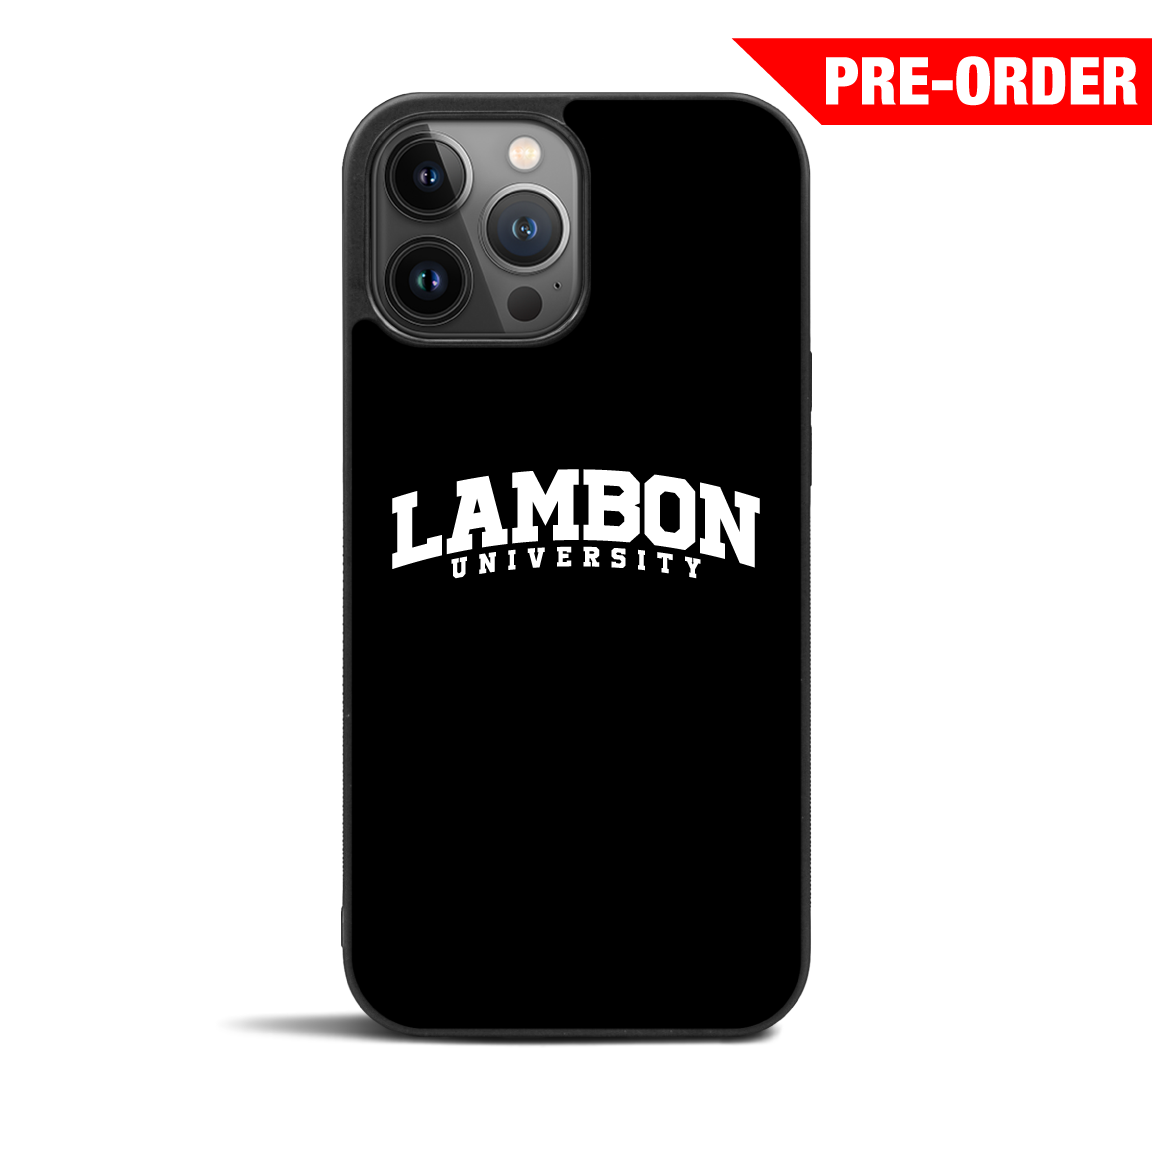 Lambon University iPhone Case